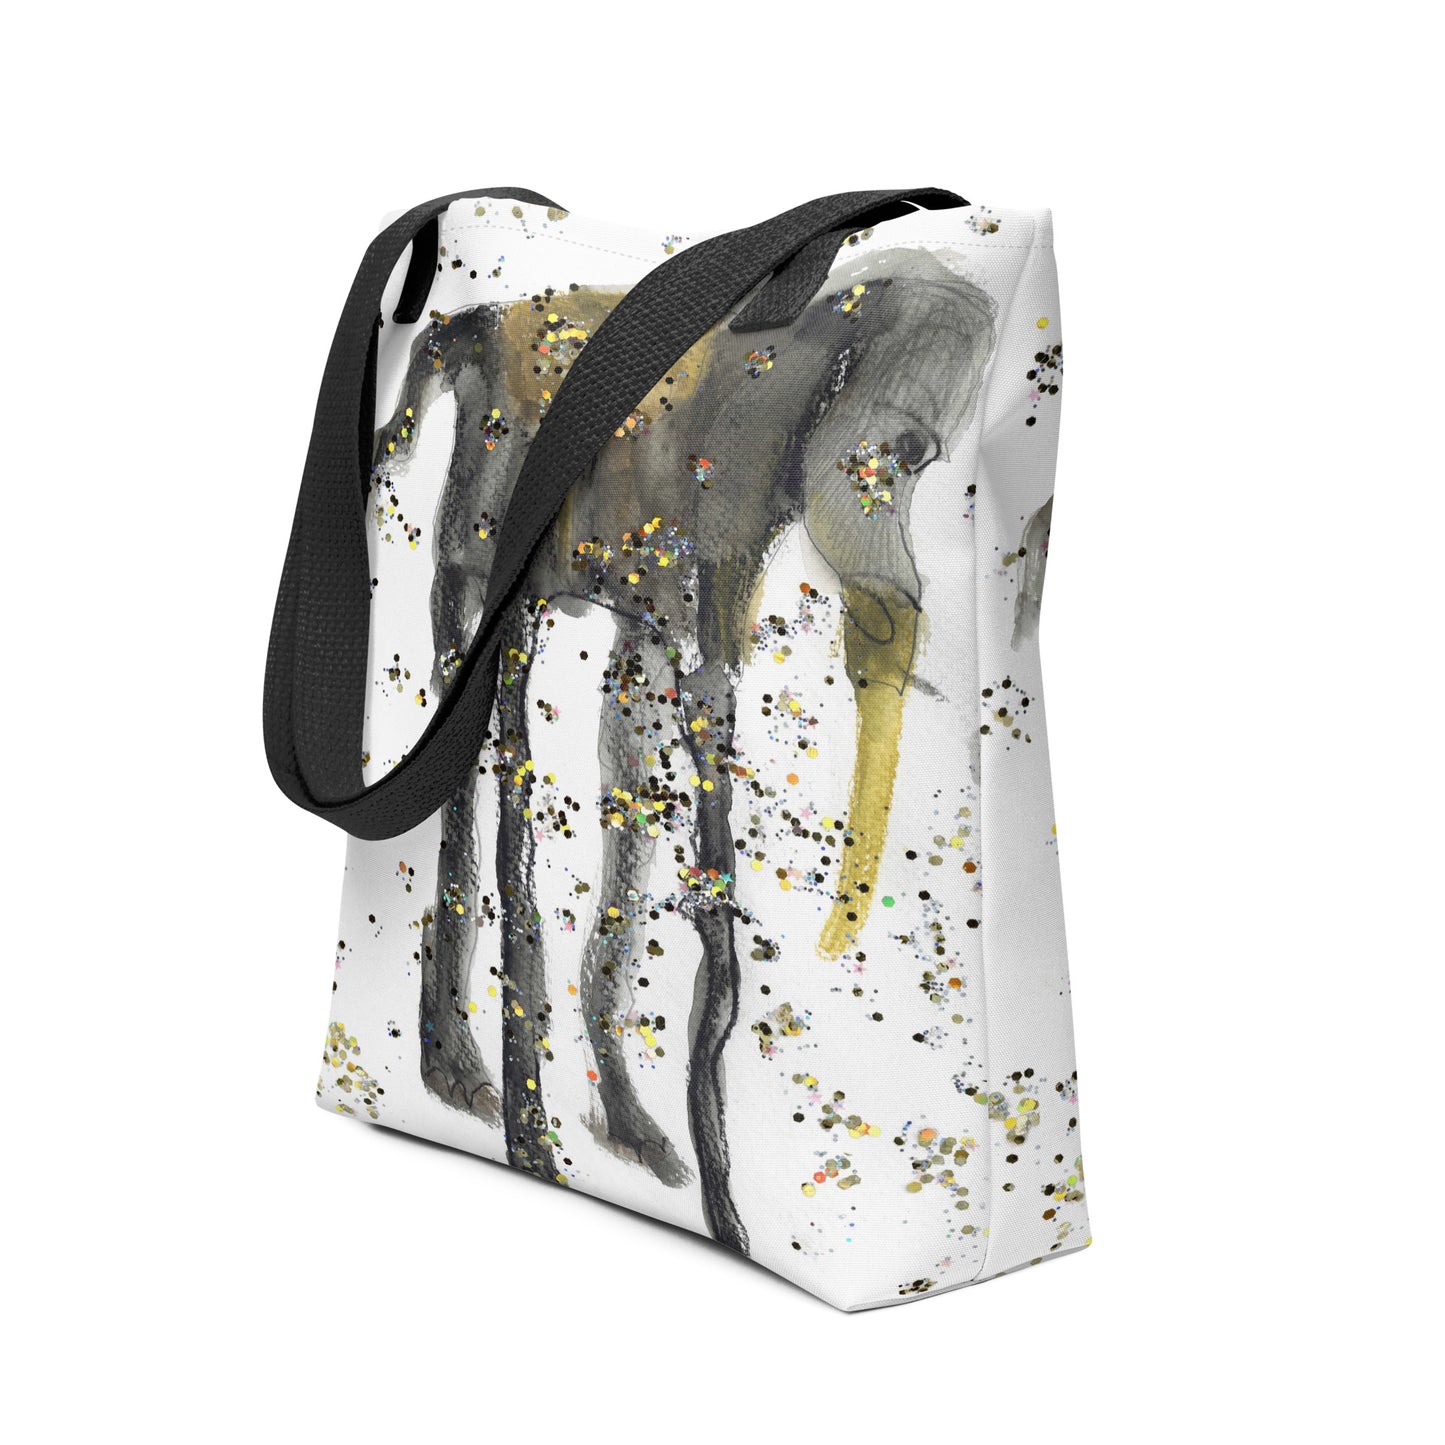 Elephant (Dali style) - Tote bag